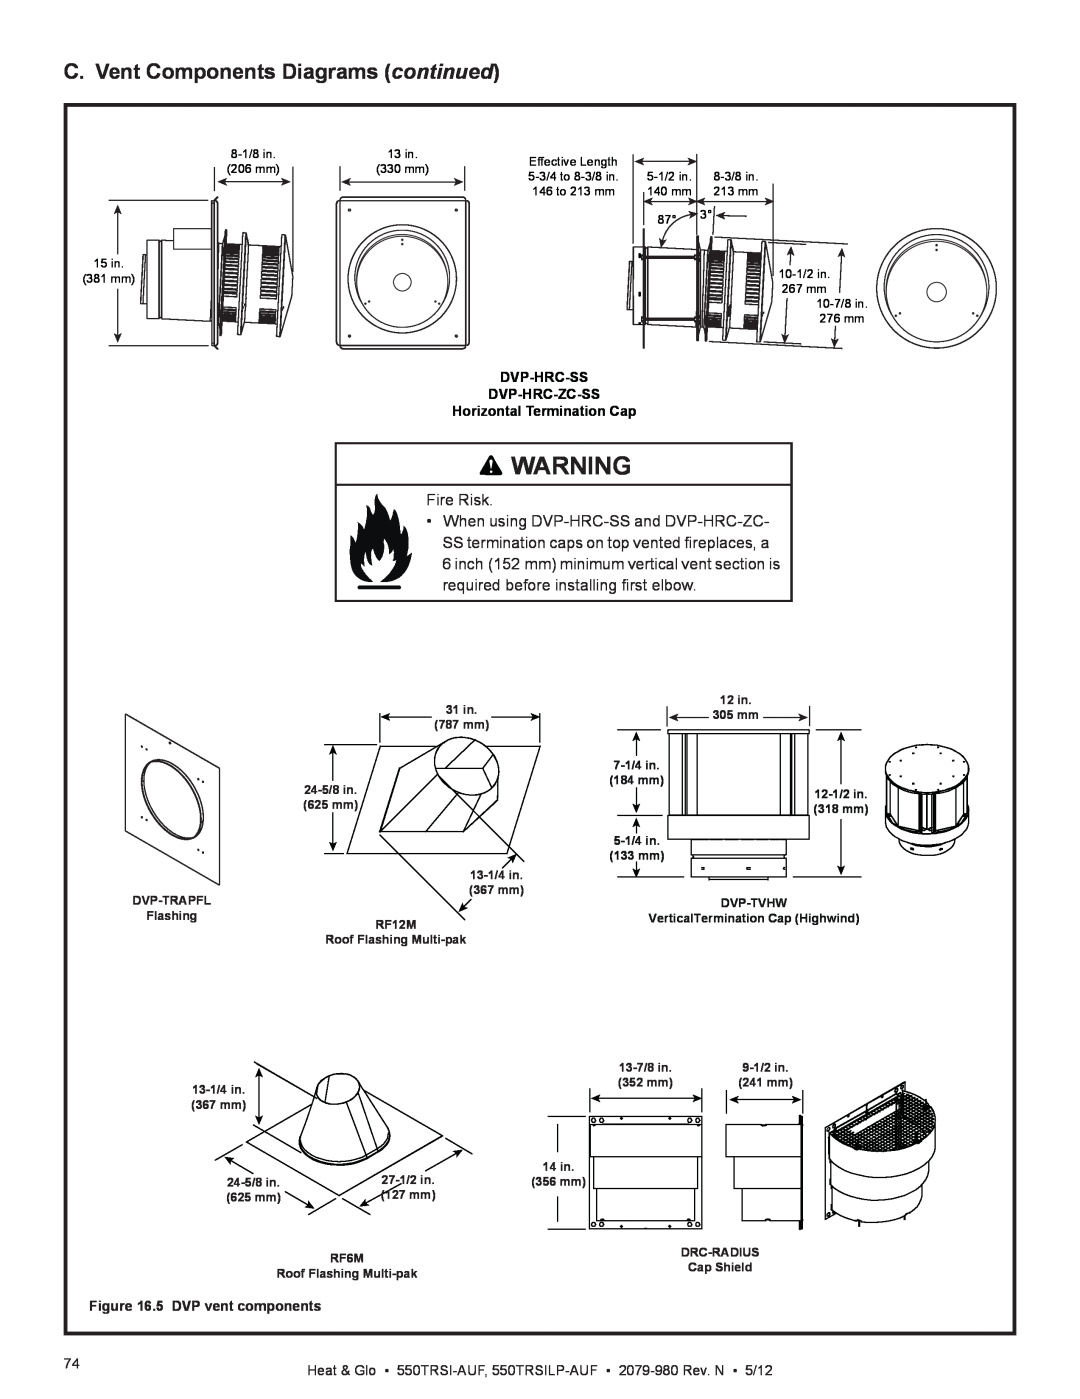 Heat & Glo LifeStyle 550TRSI-AUF owner manual C. Vent Components Diagrams continued, Fire Risk, Dvp-Hrc-Ss Dvp-Hrc-Zc-Ss 